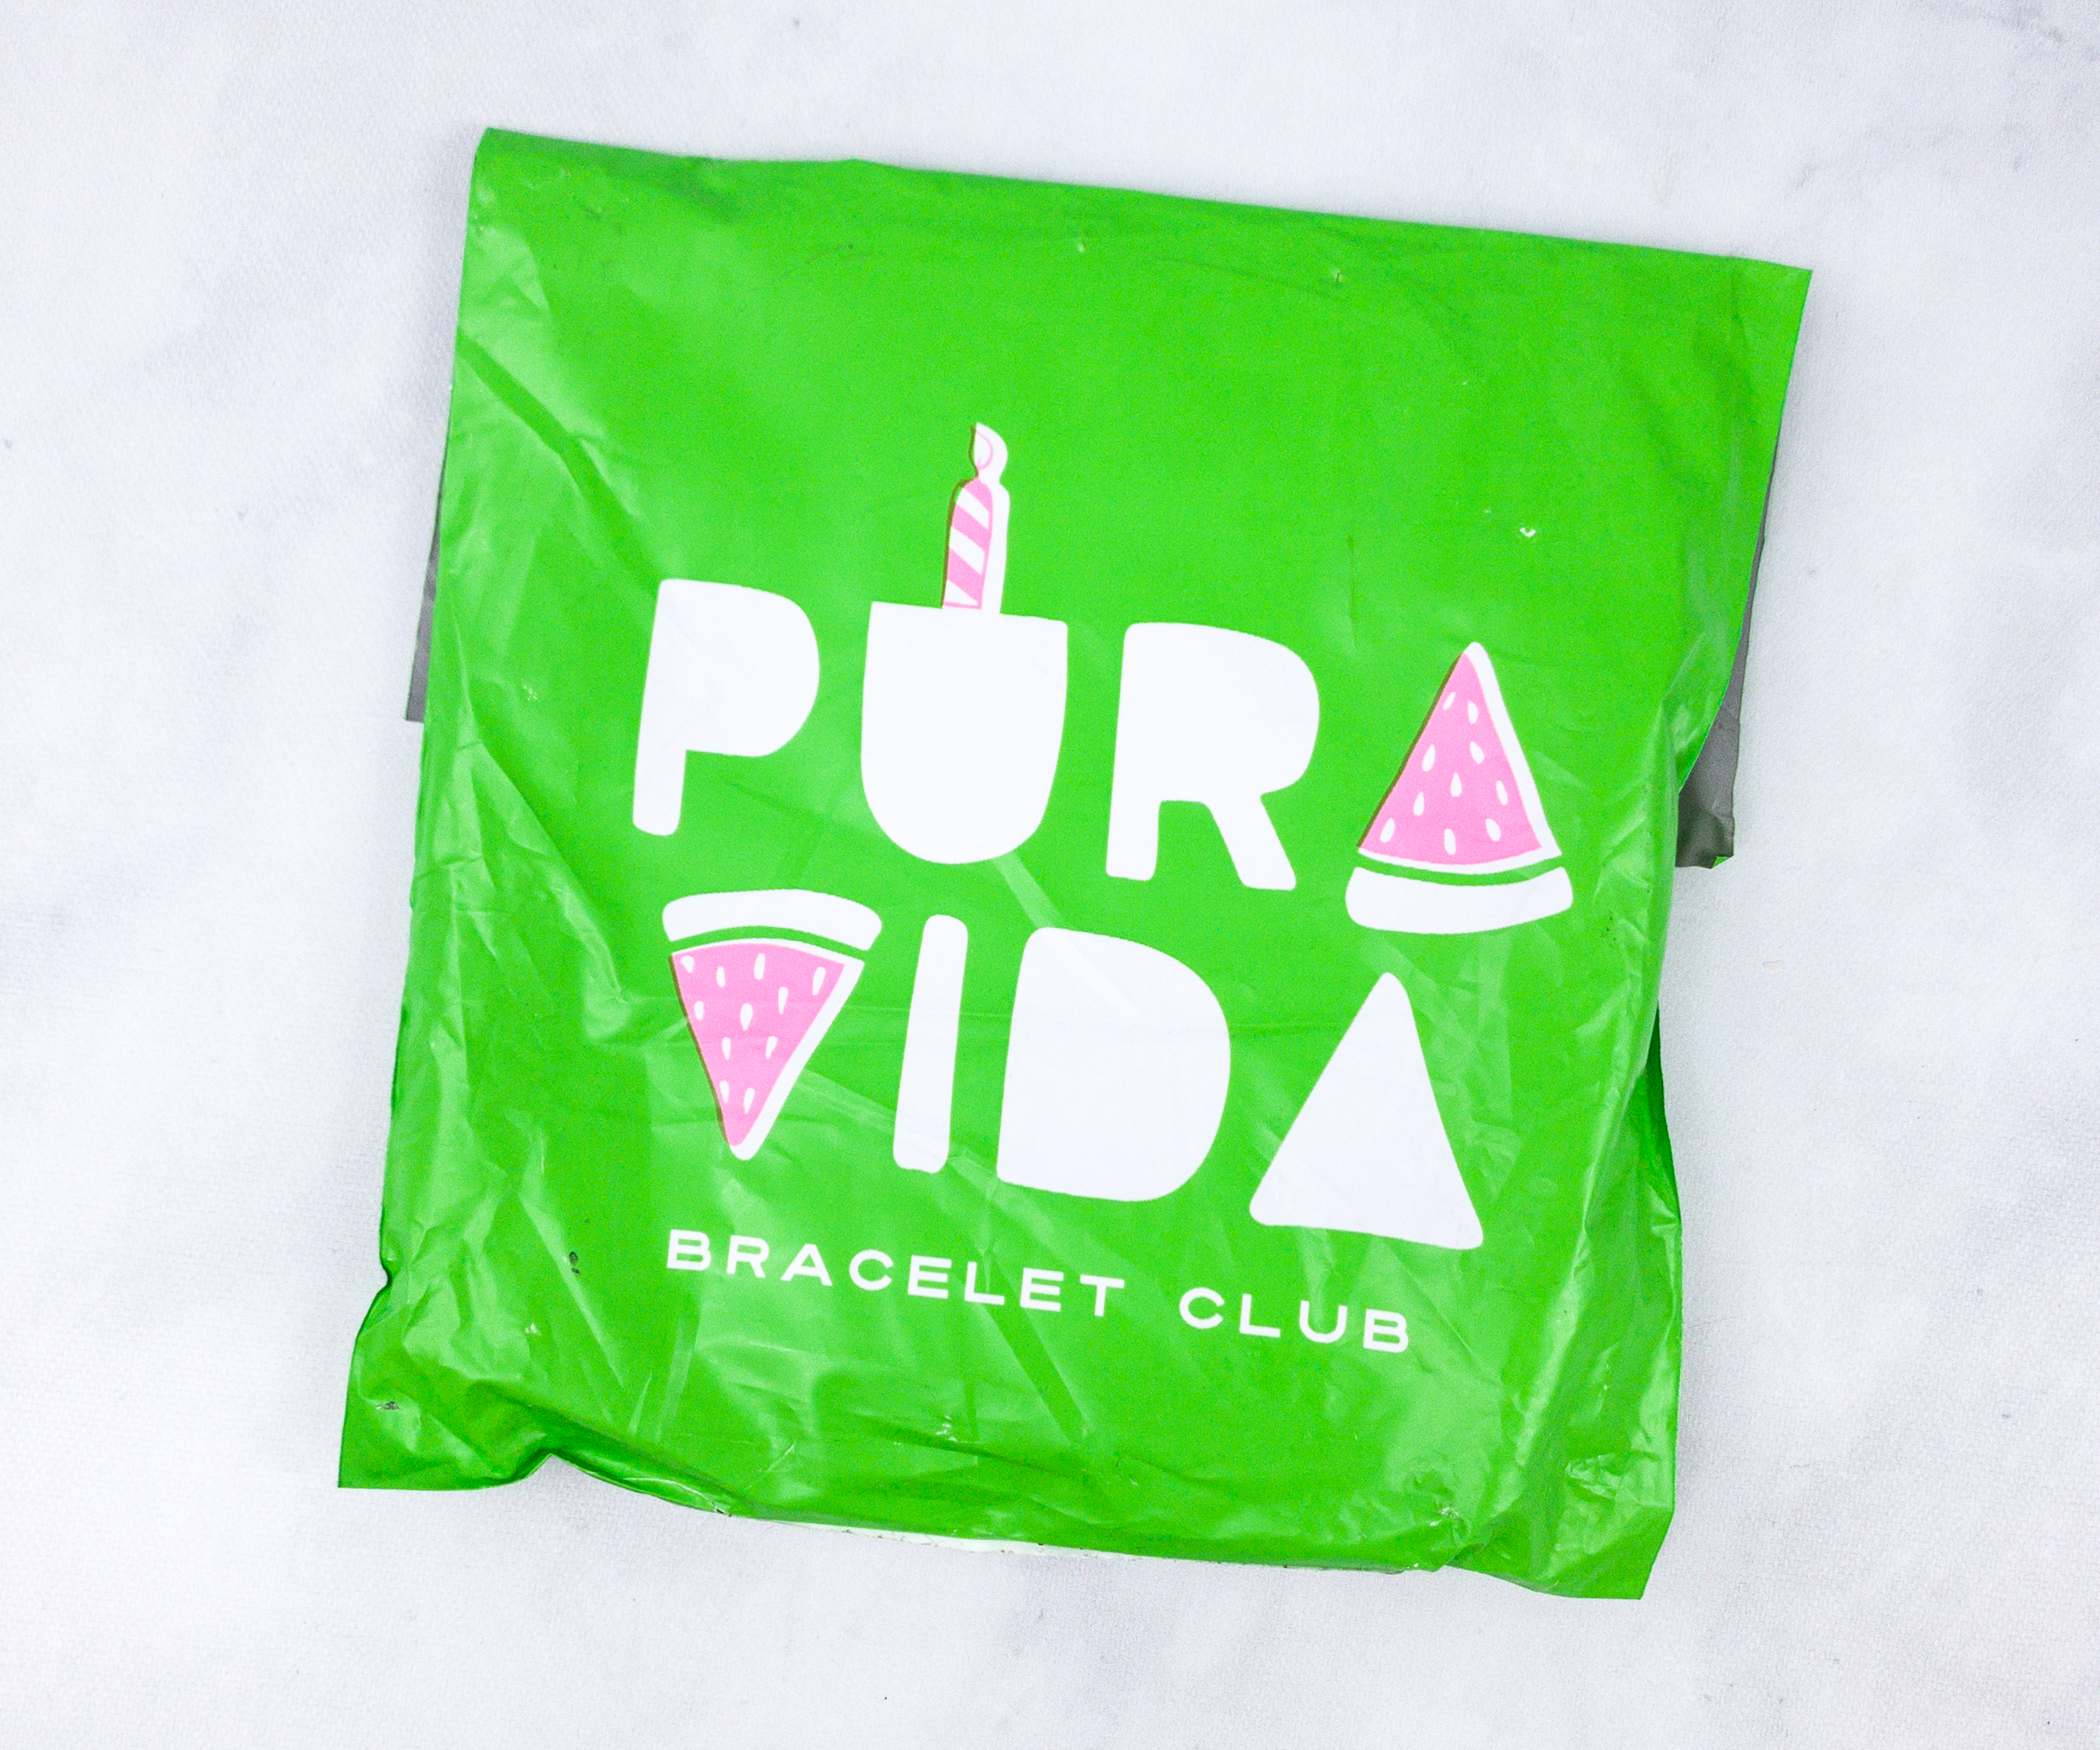 Pura Vida Bracelets Club July Review Coupon Hello Subscription